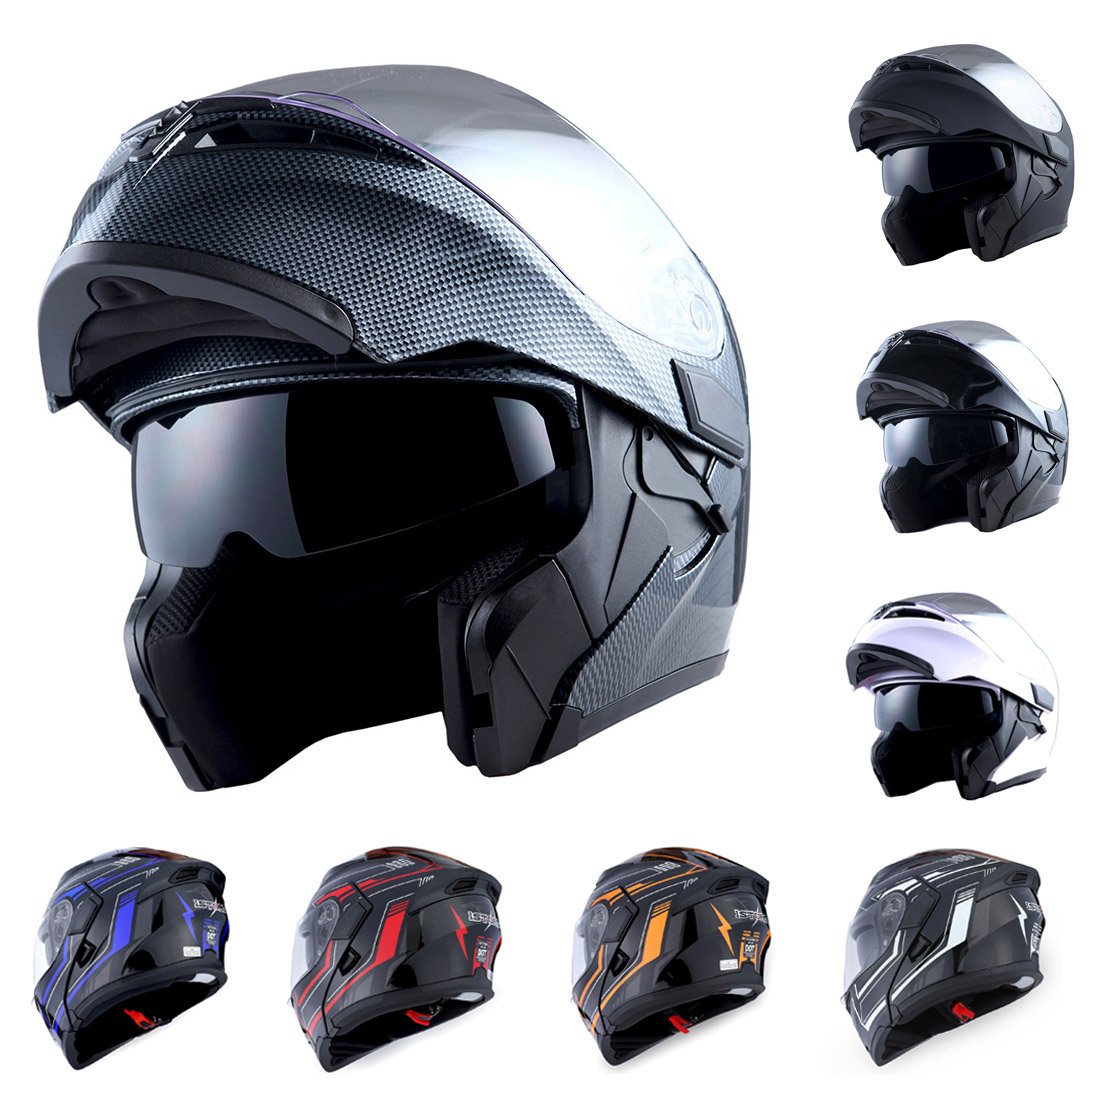 1Storm Motorcycle Modular Full Face Helmet - 2020 REVIEW!